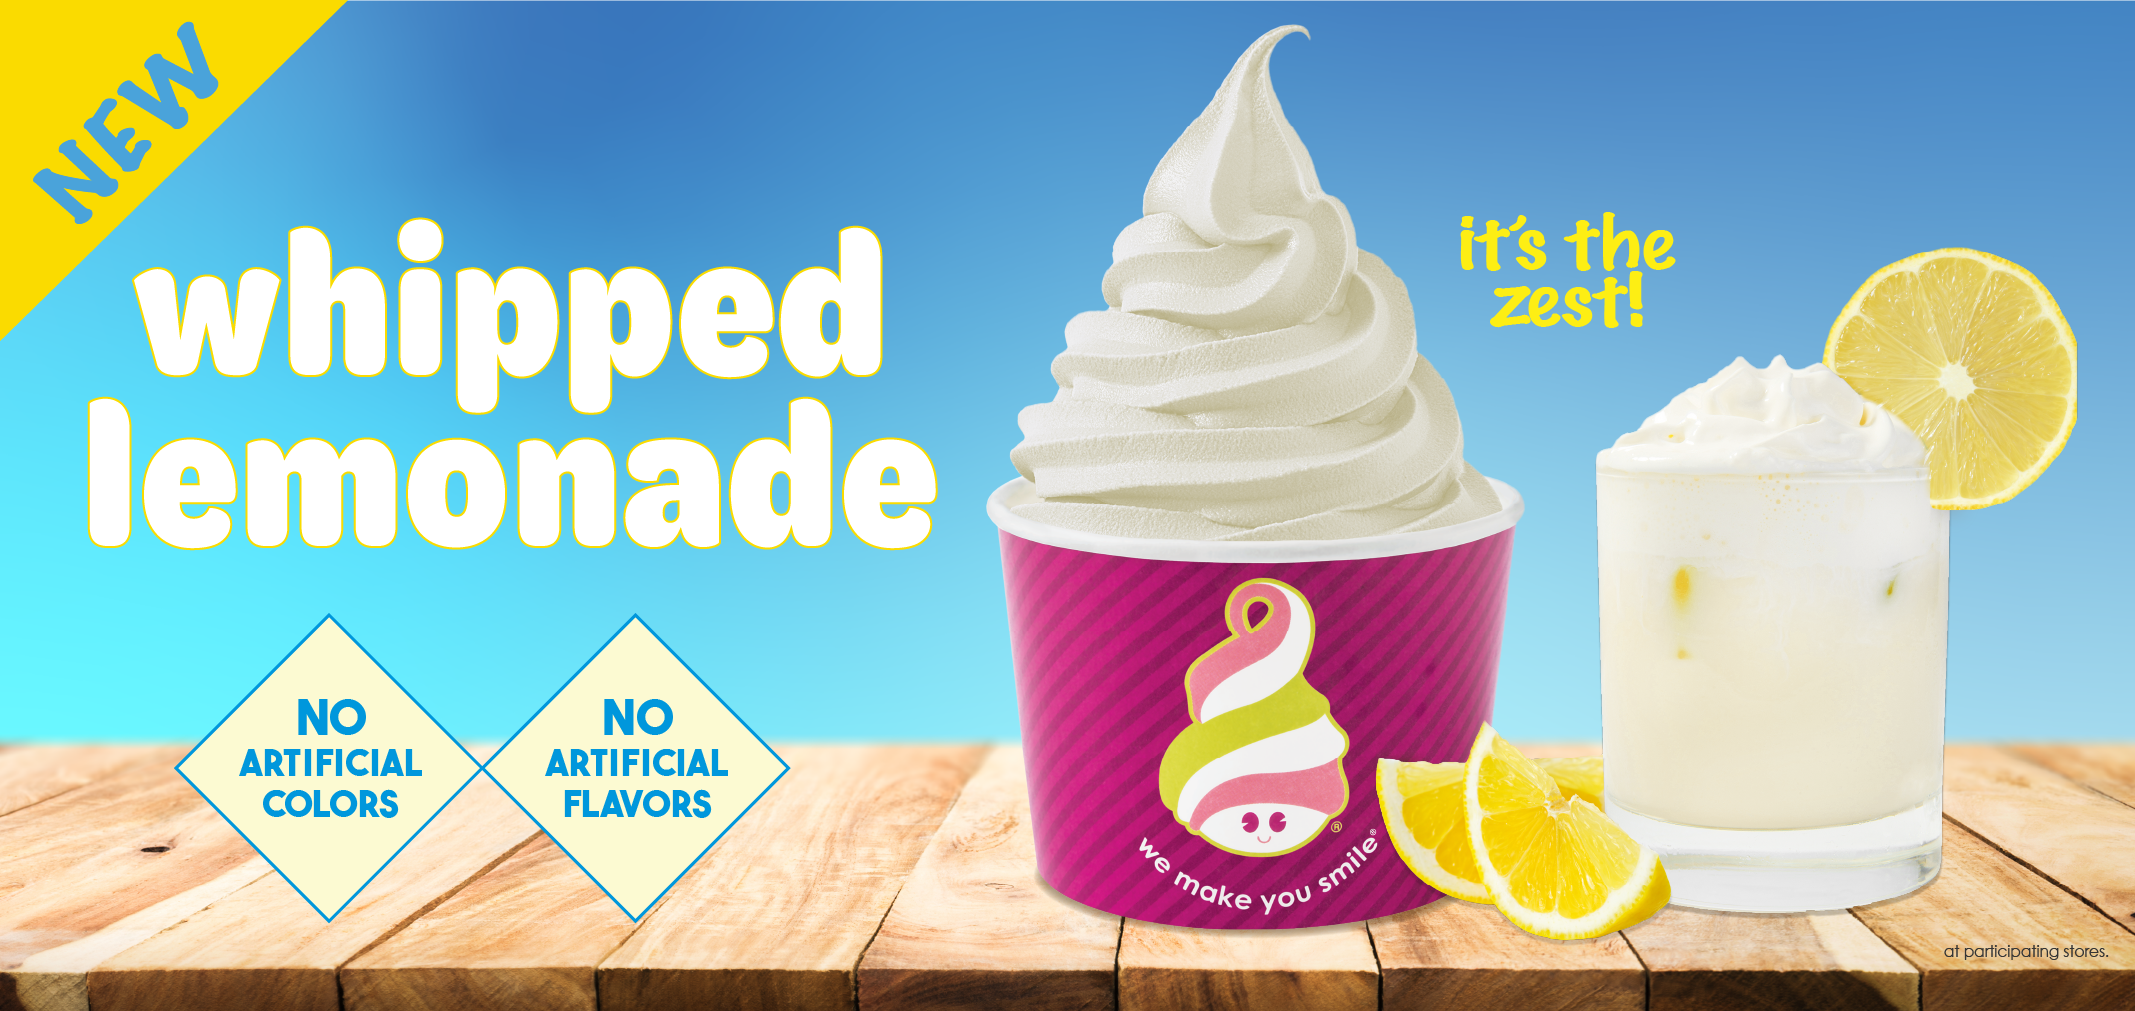 Whipped Lemonade label image